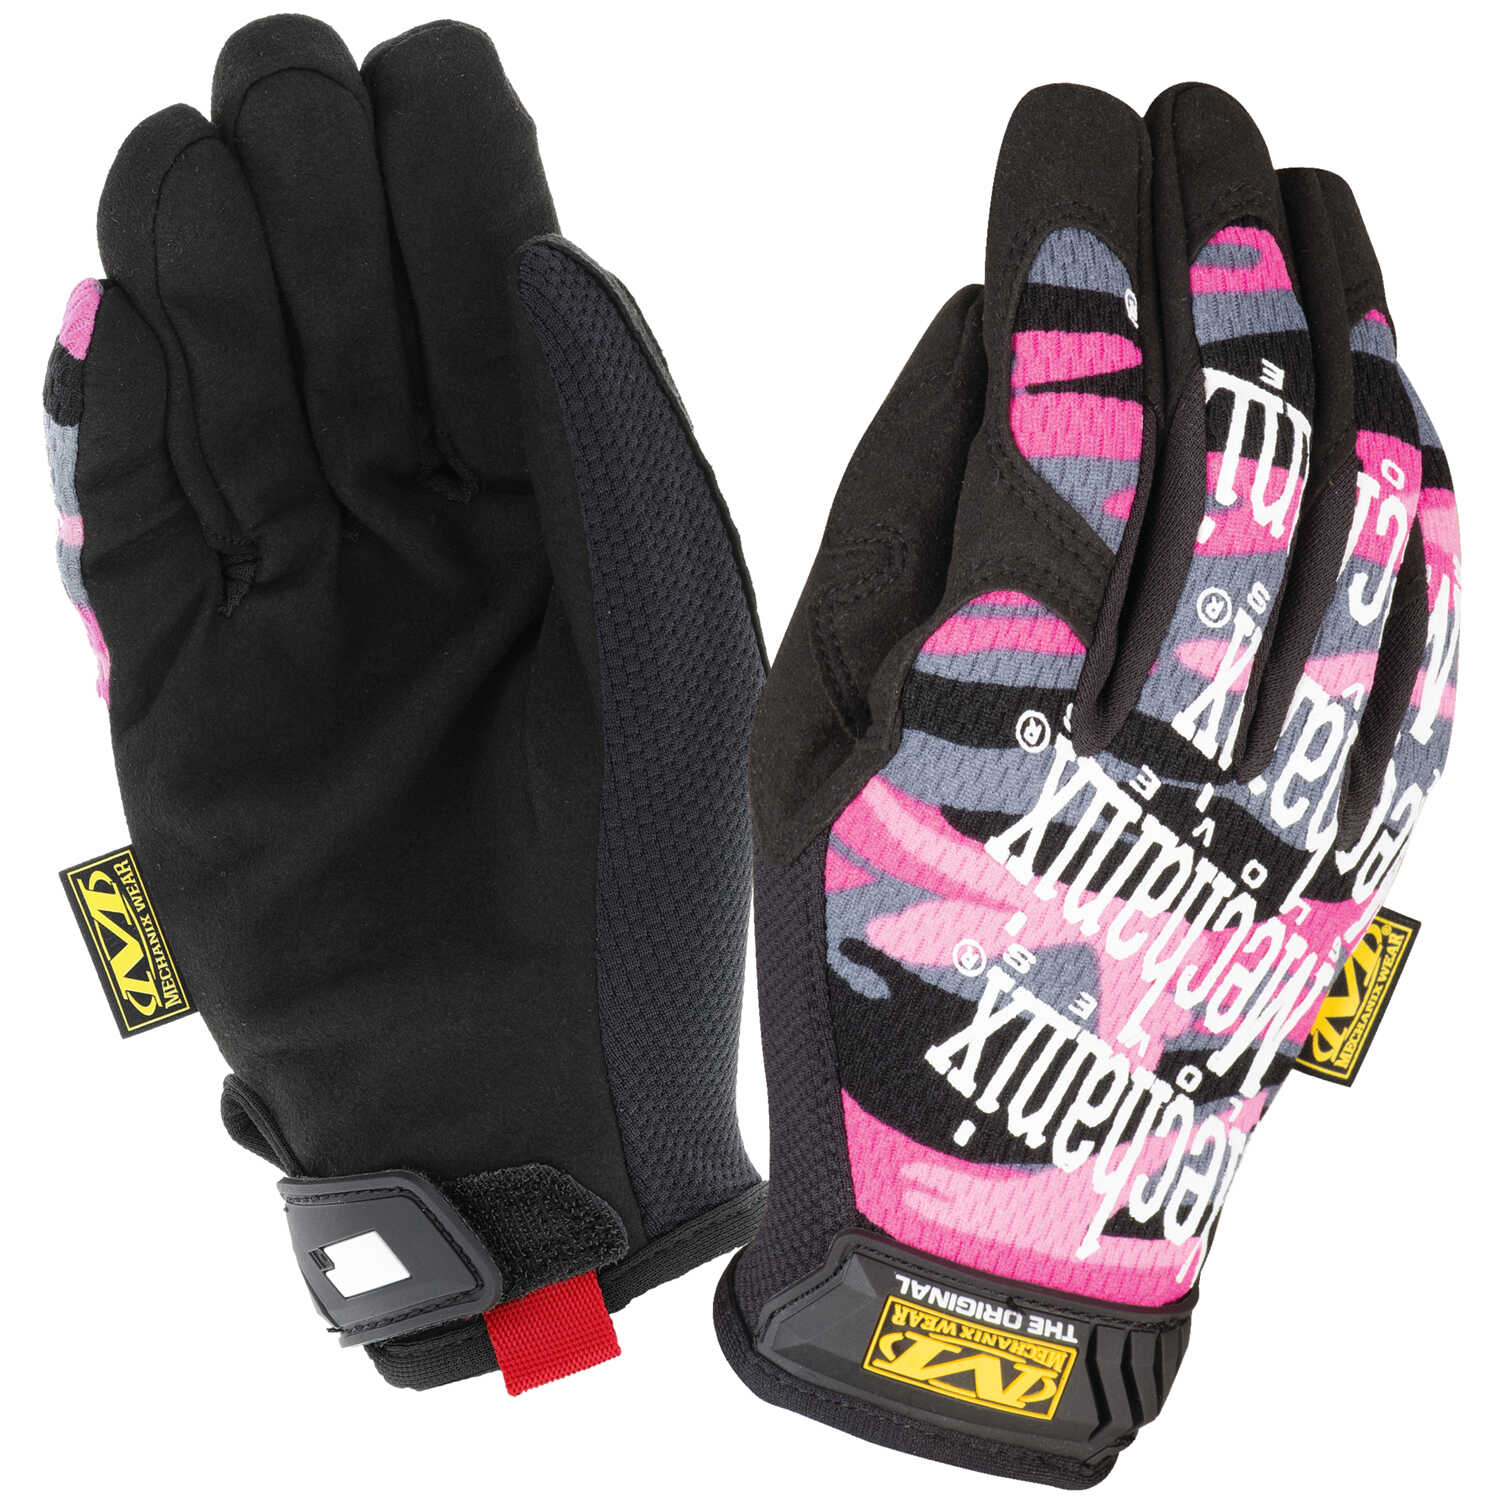 Mechanix Wear Original Gloves Women's Large Pink Camo for sale online 